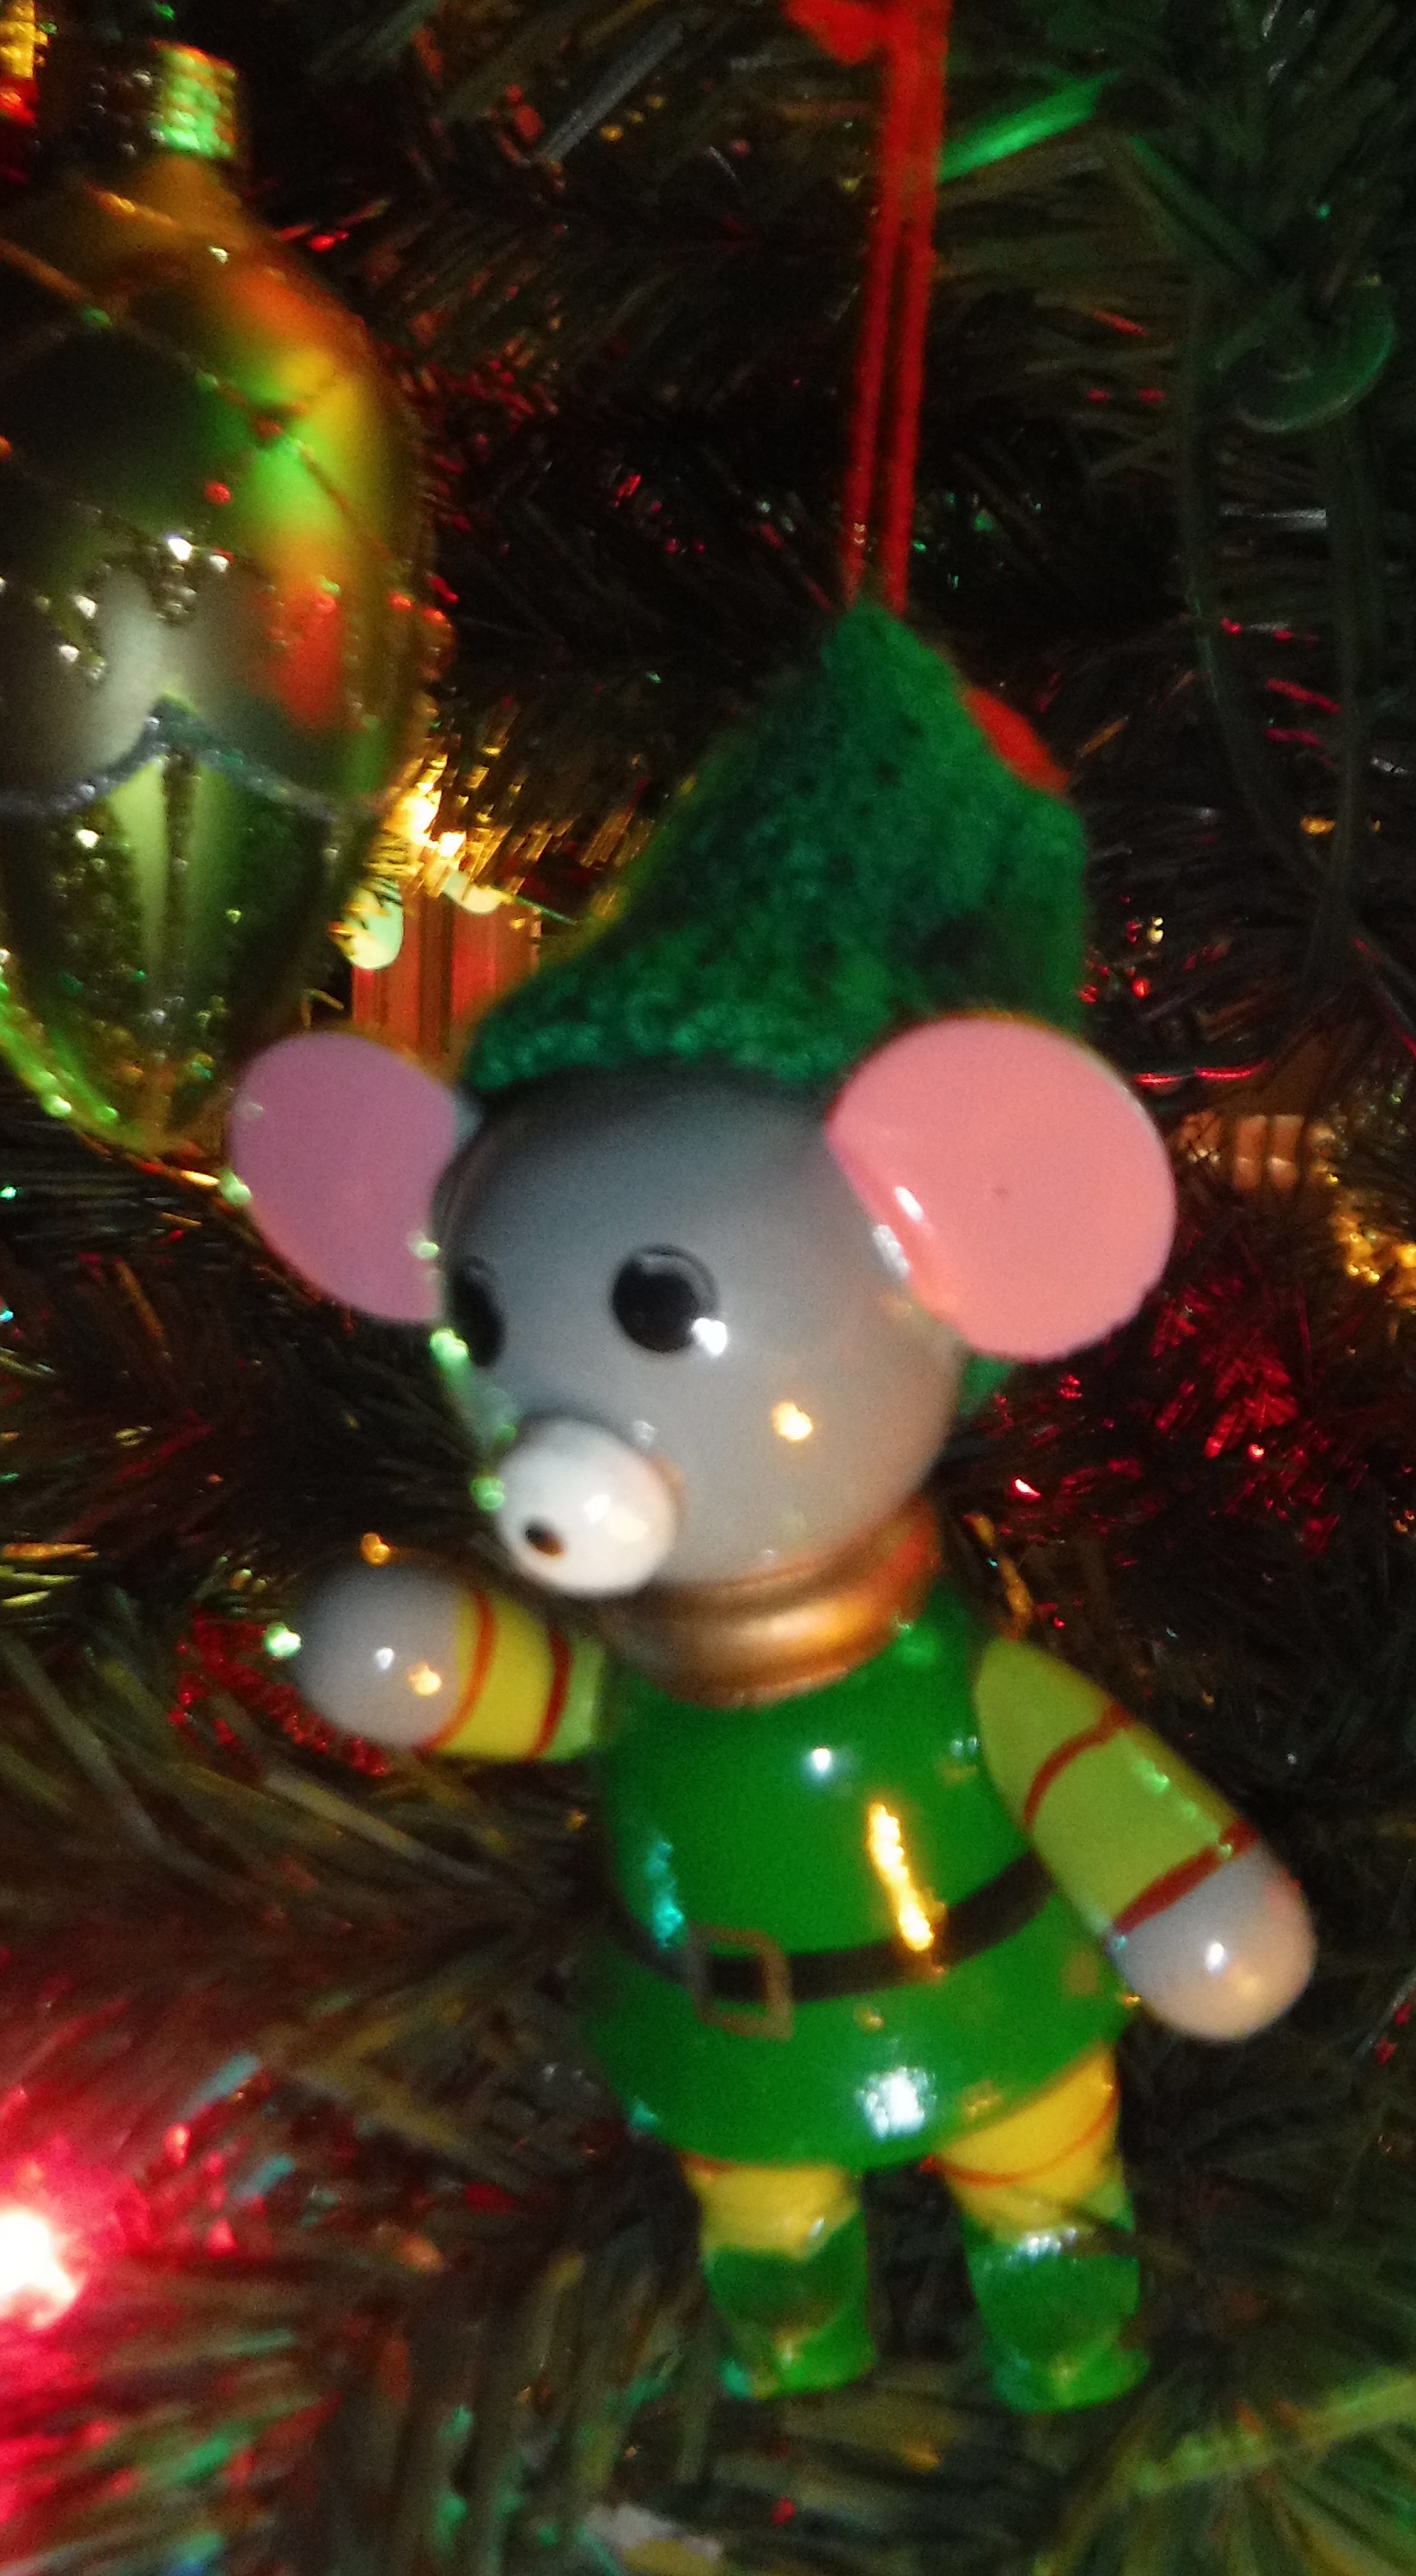 Ornament on my tree 12-13-19